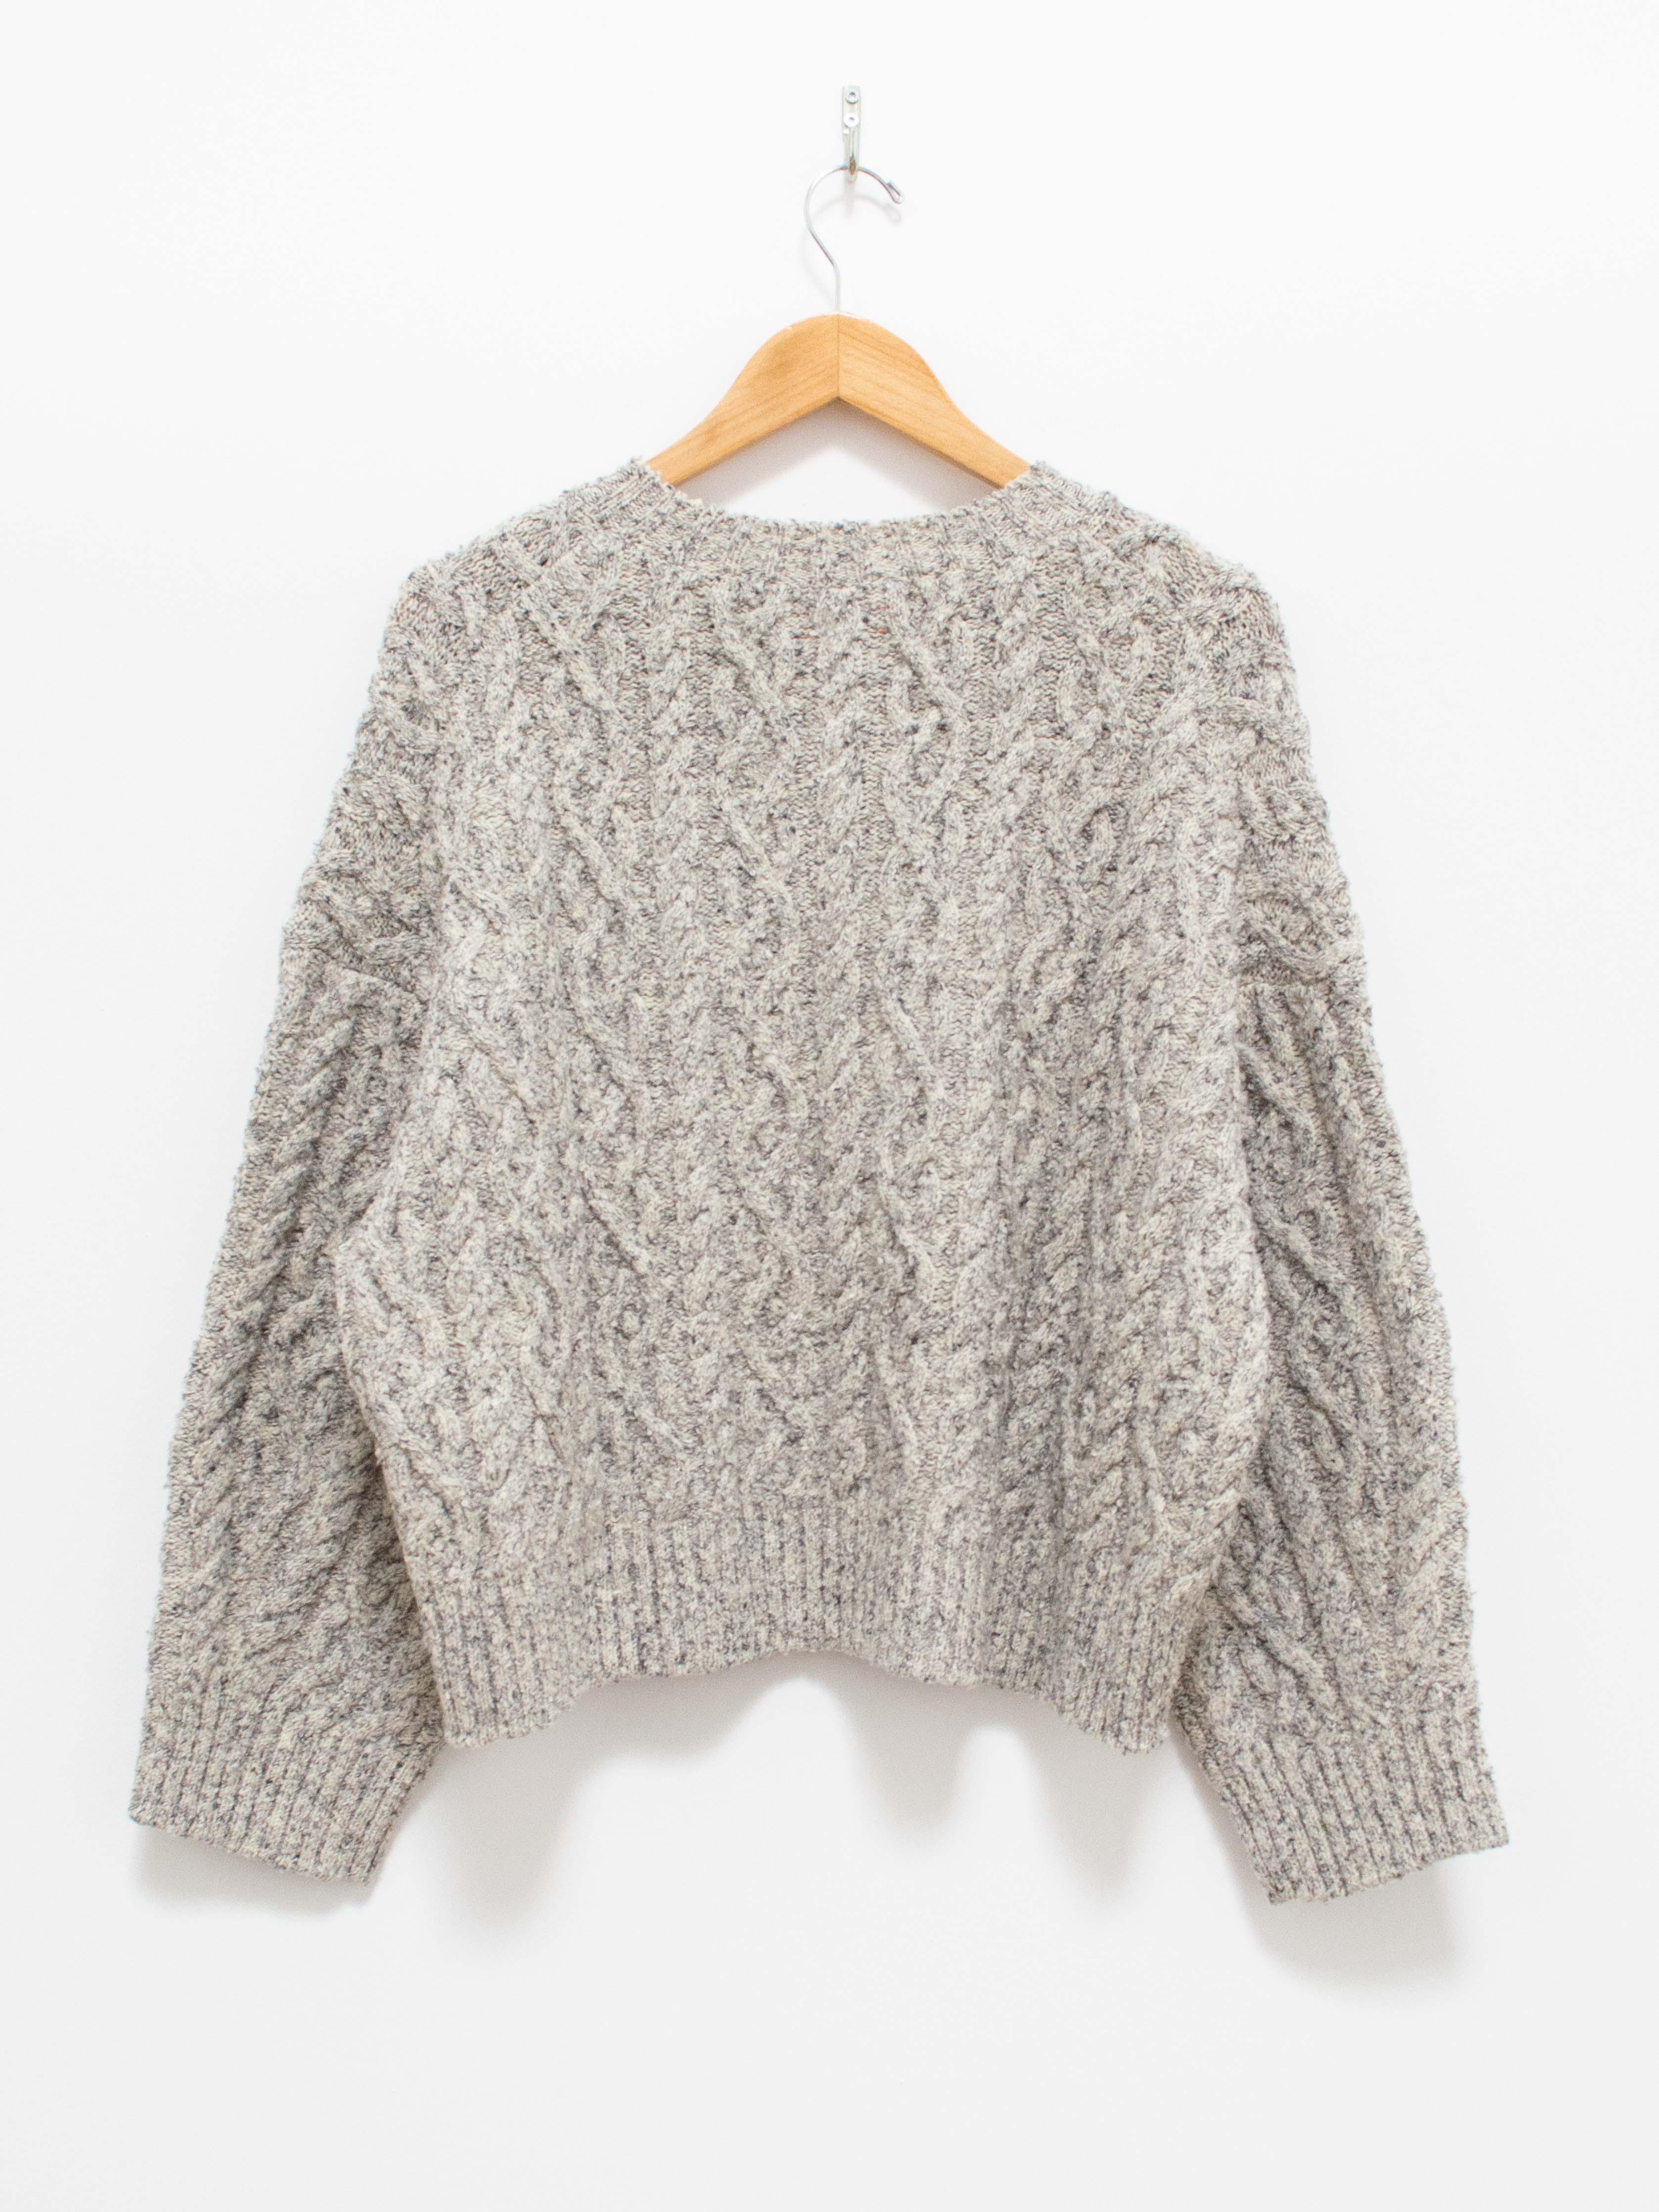 Namu Shop - Unfil French Merino Cotton Boucle Cable Knit Sweater - Gray Mix